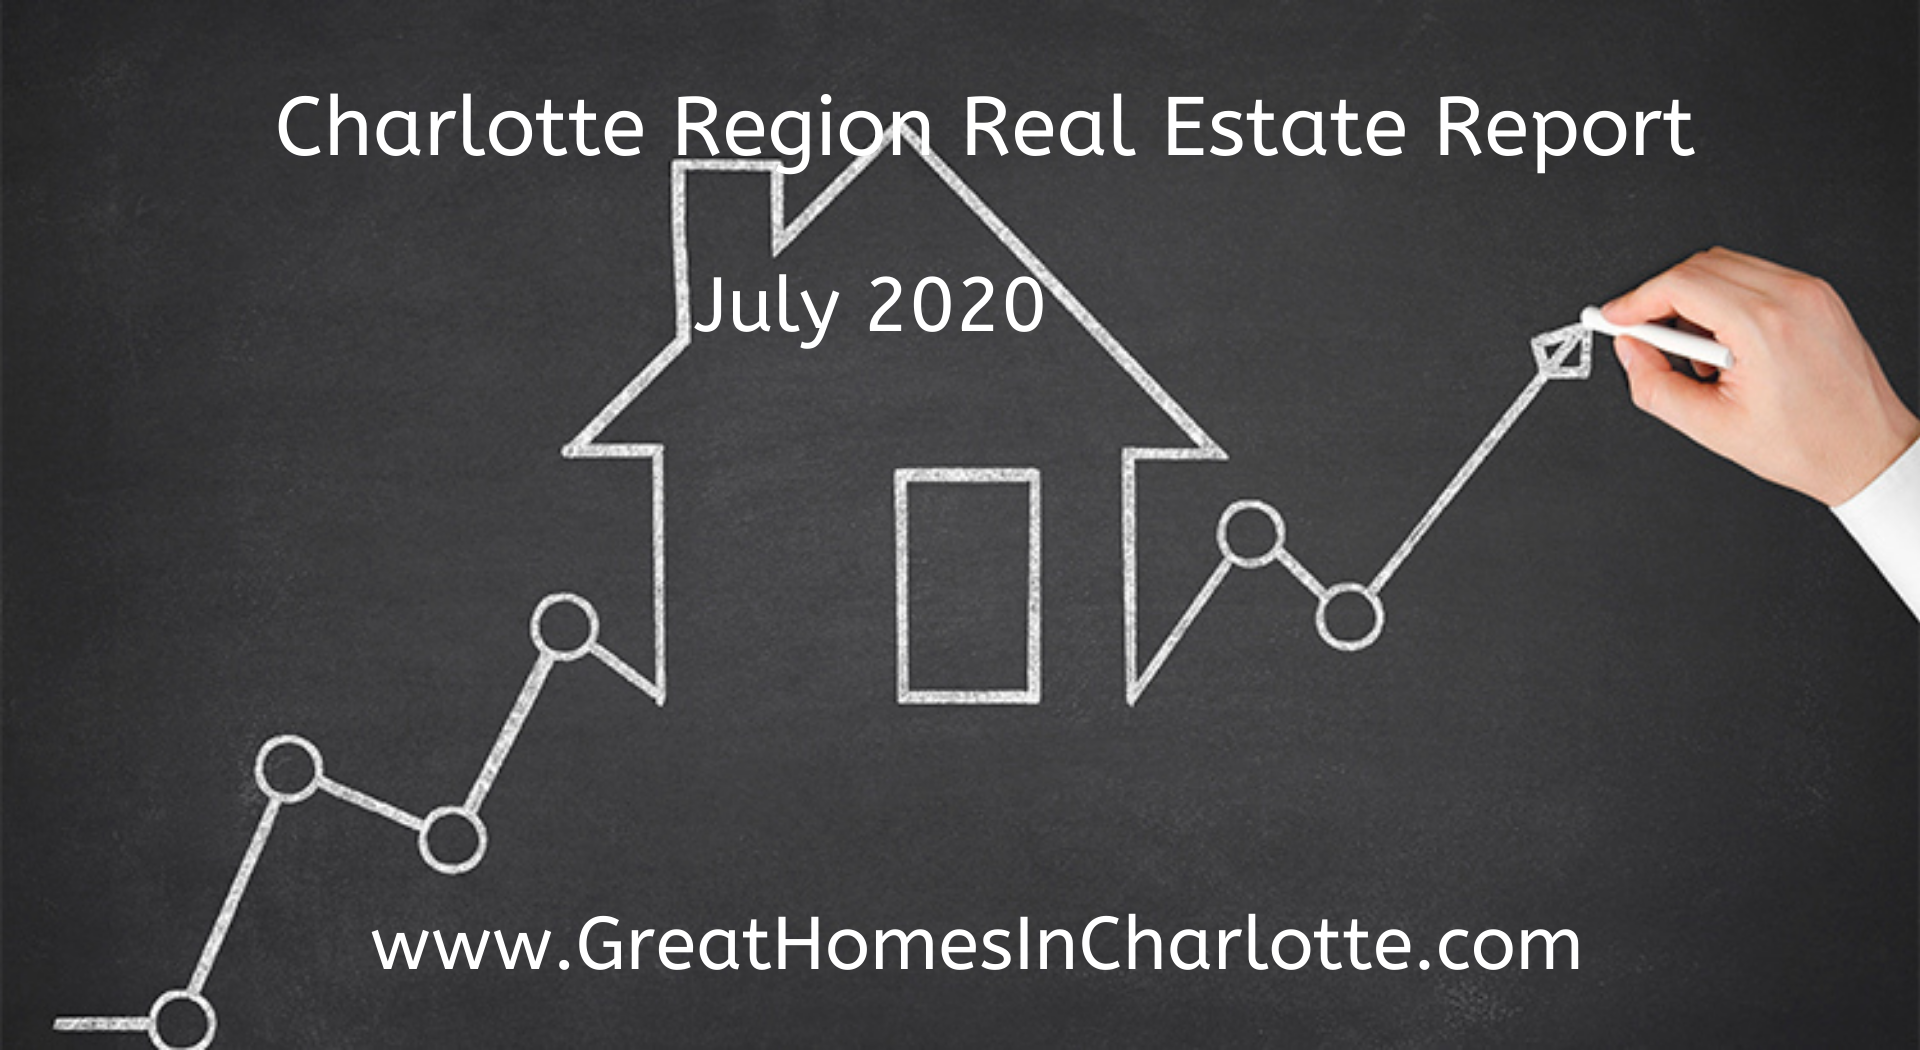 Charlotte Region Real Estate Report: July 2020